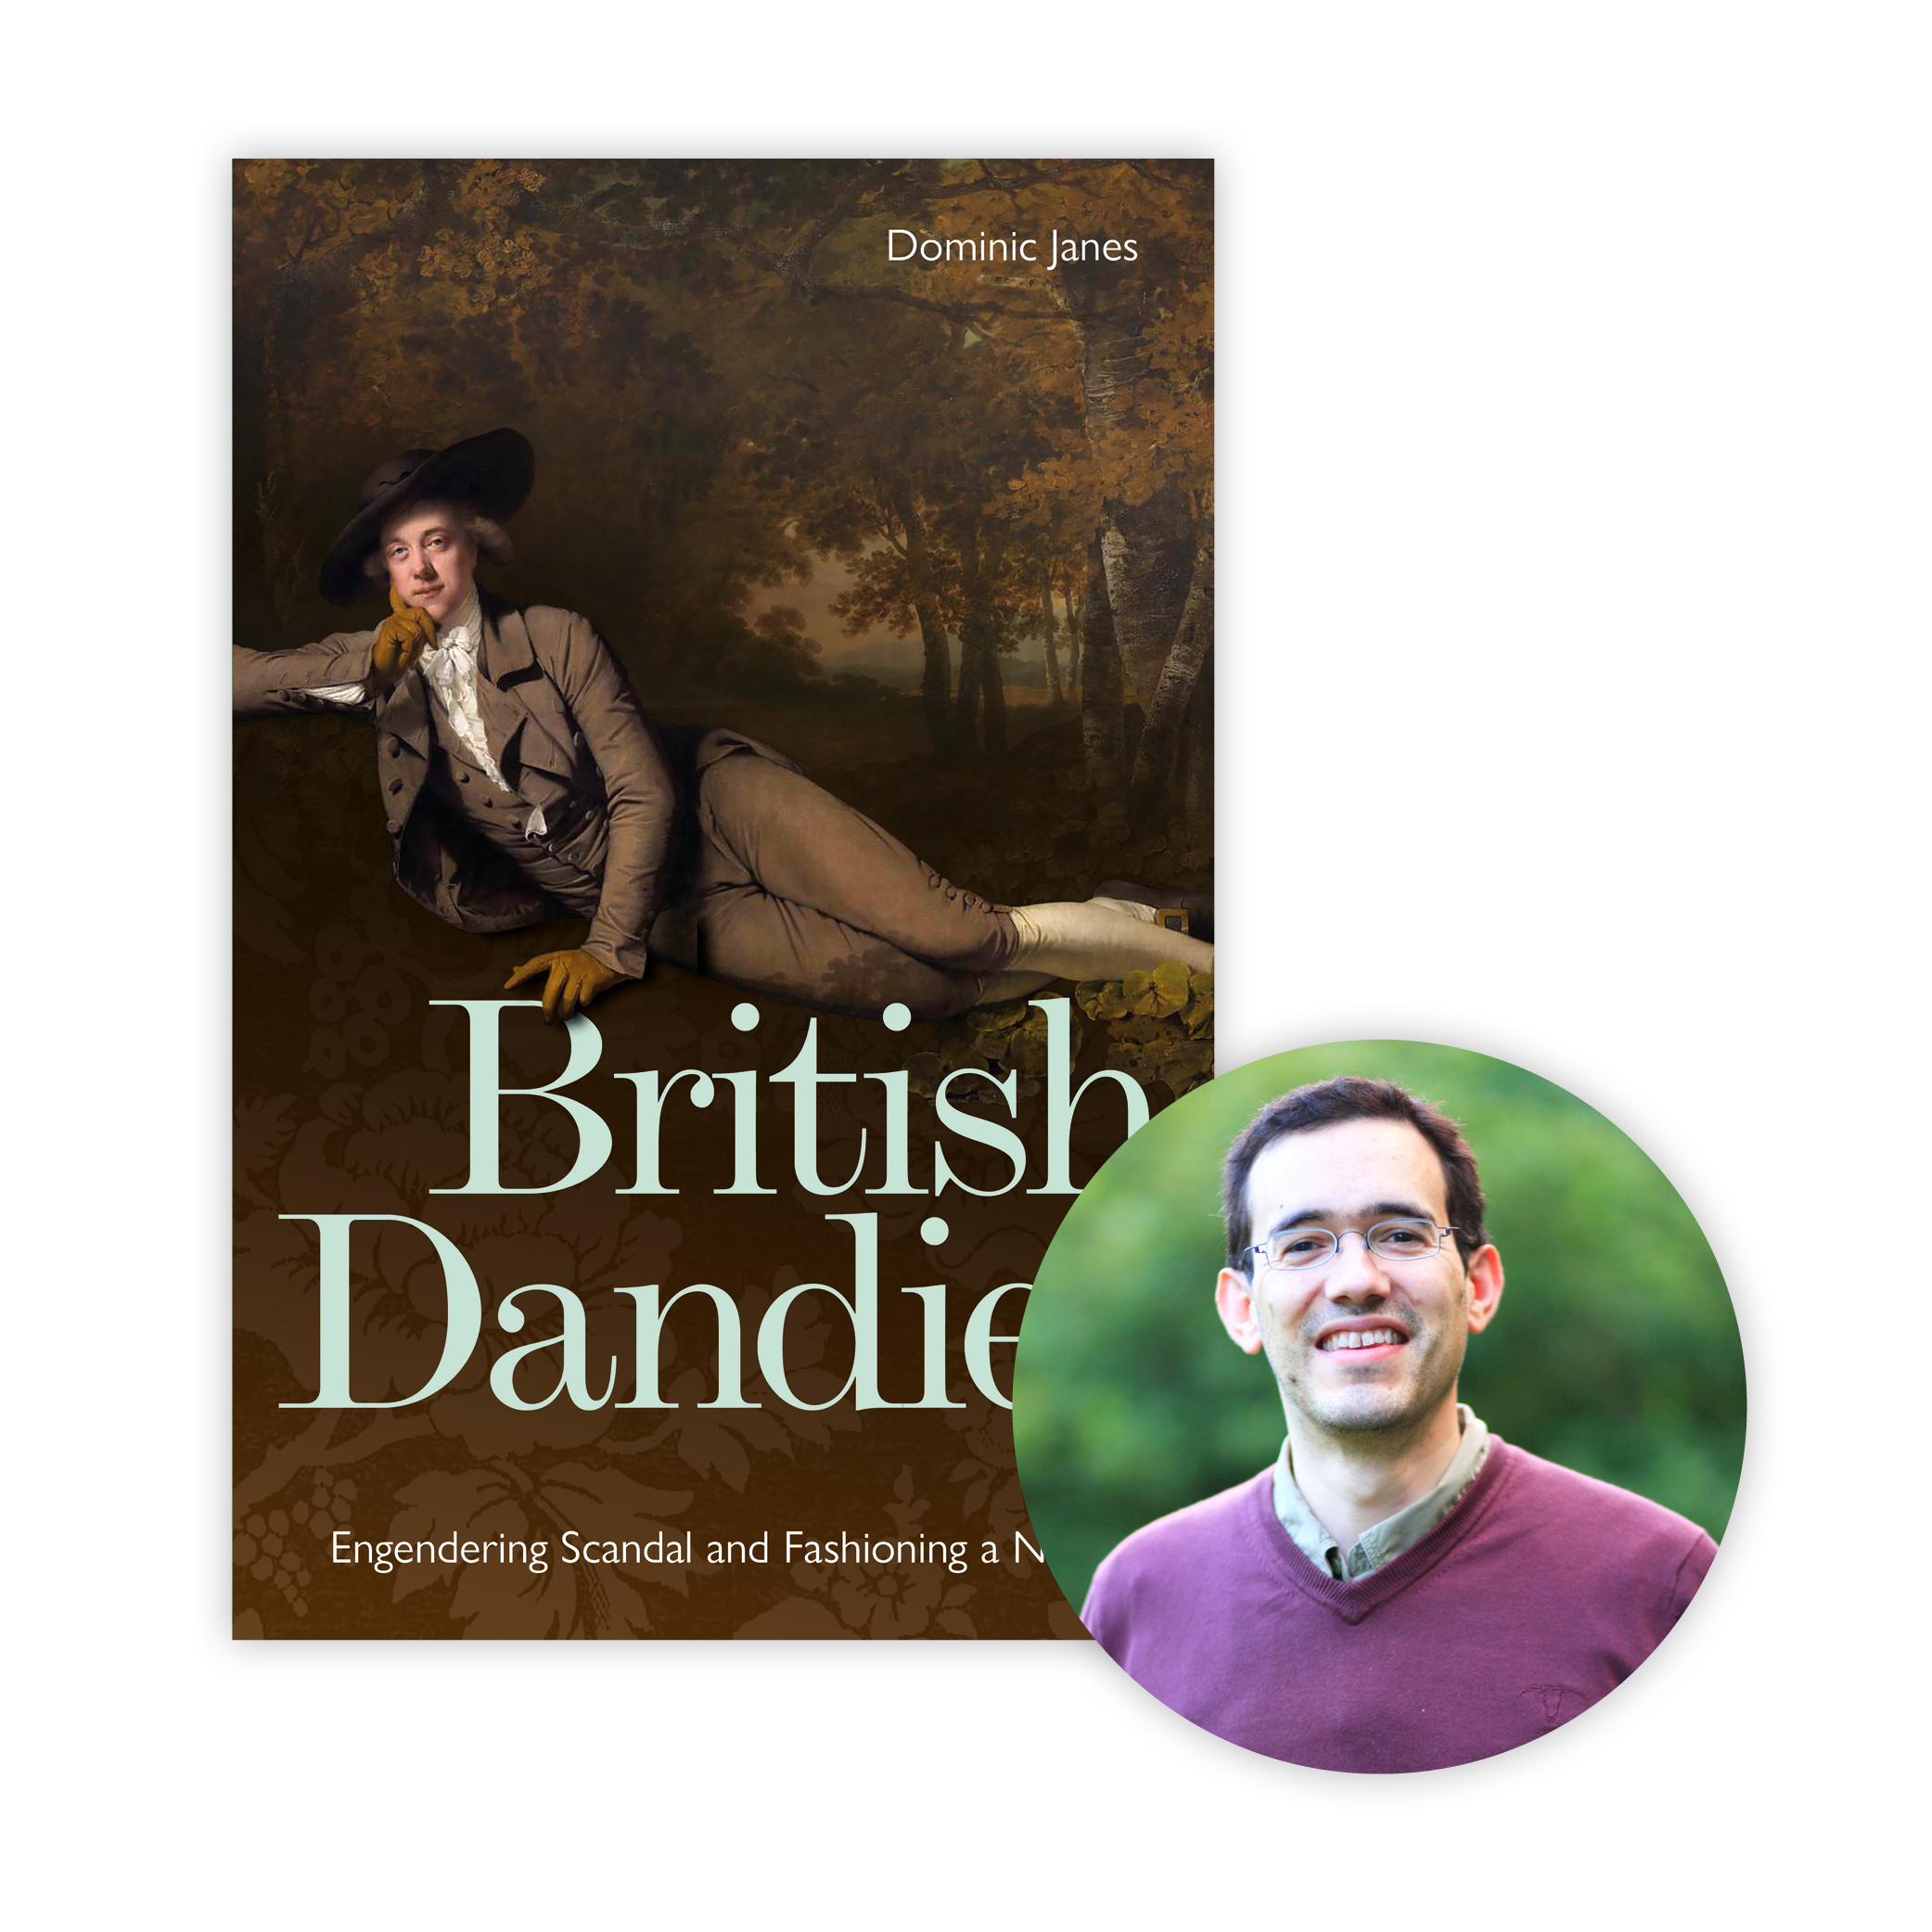 British Dandies and Dominic James author